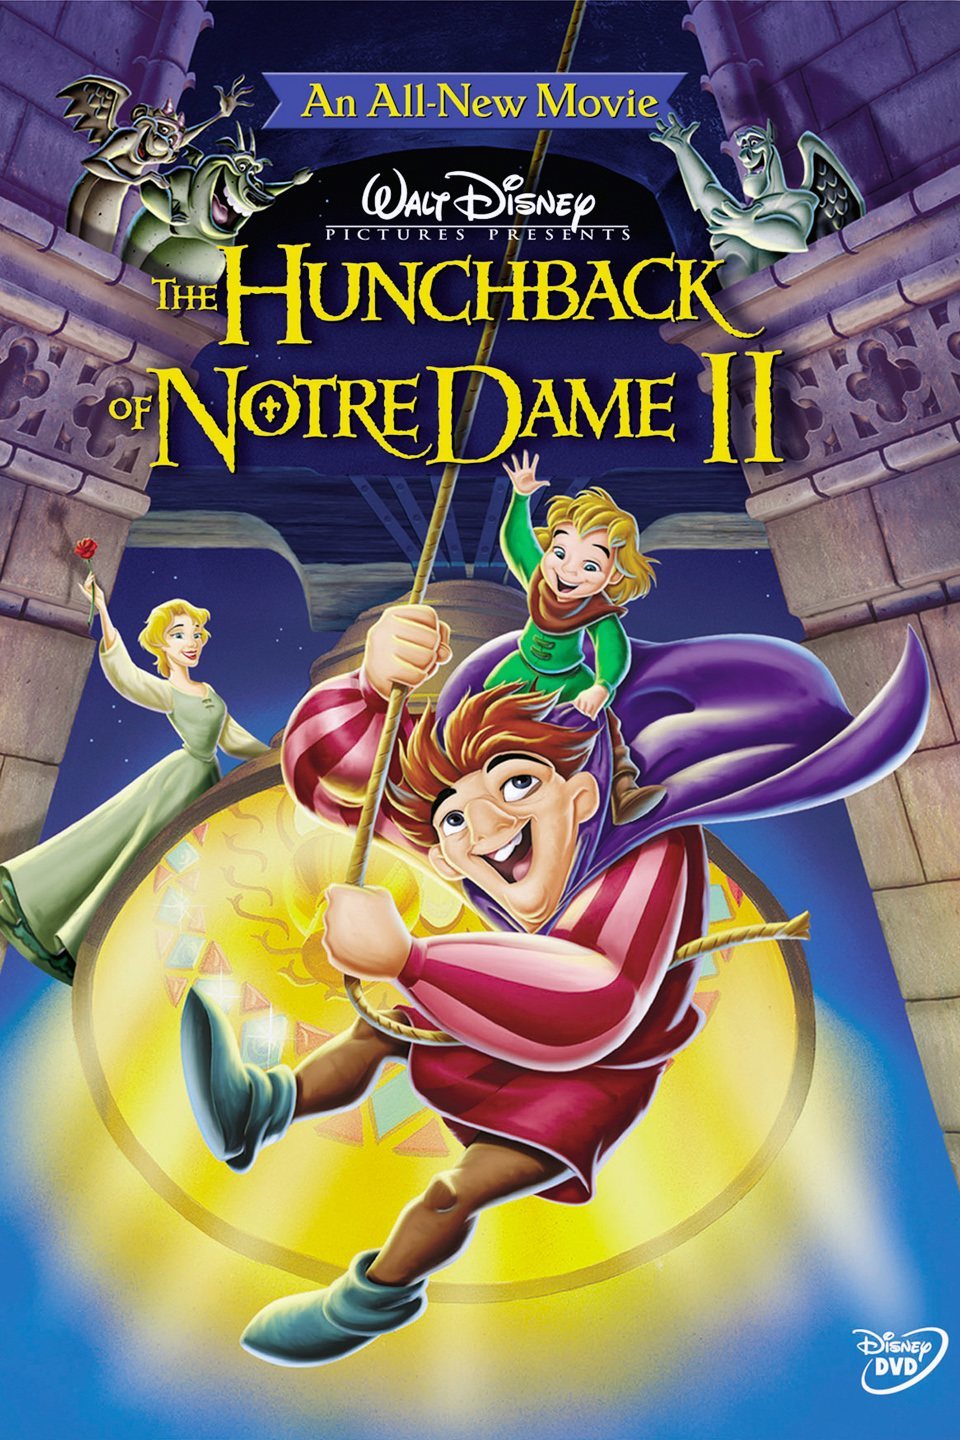 Cartel de El jorobado de Notre Dame 2 - The Hunchback of Notre Dame II